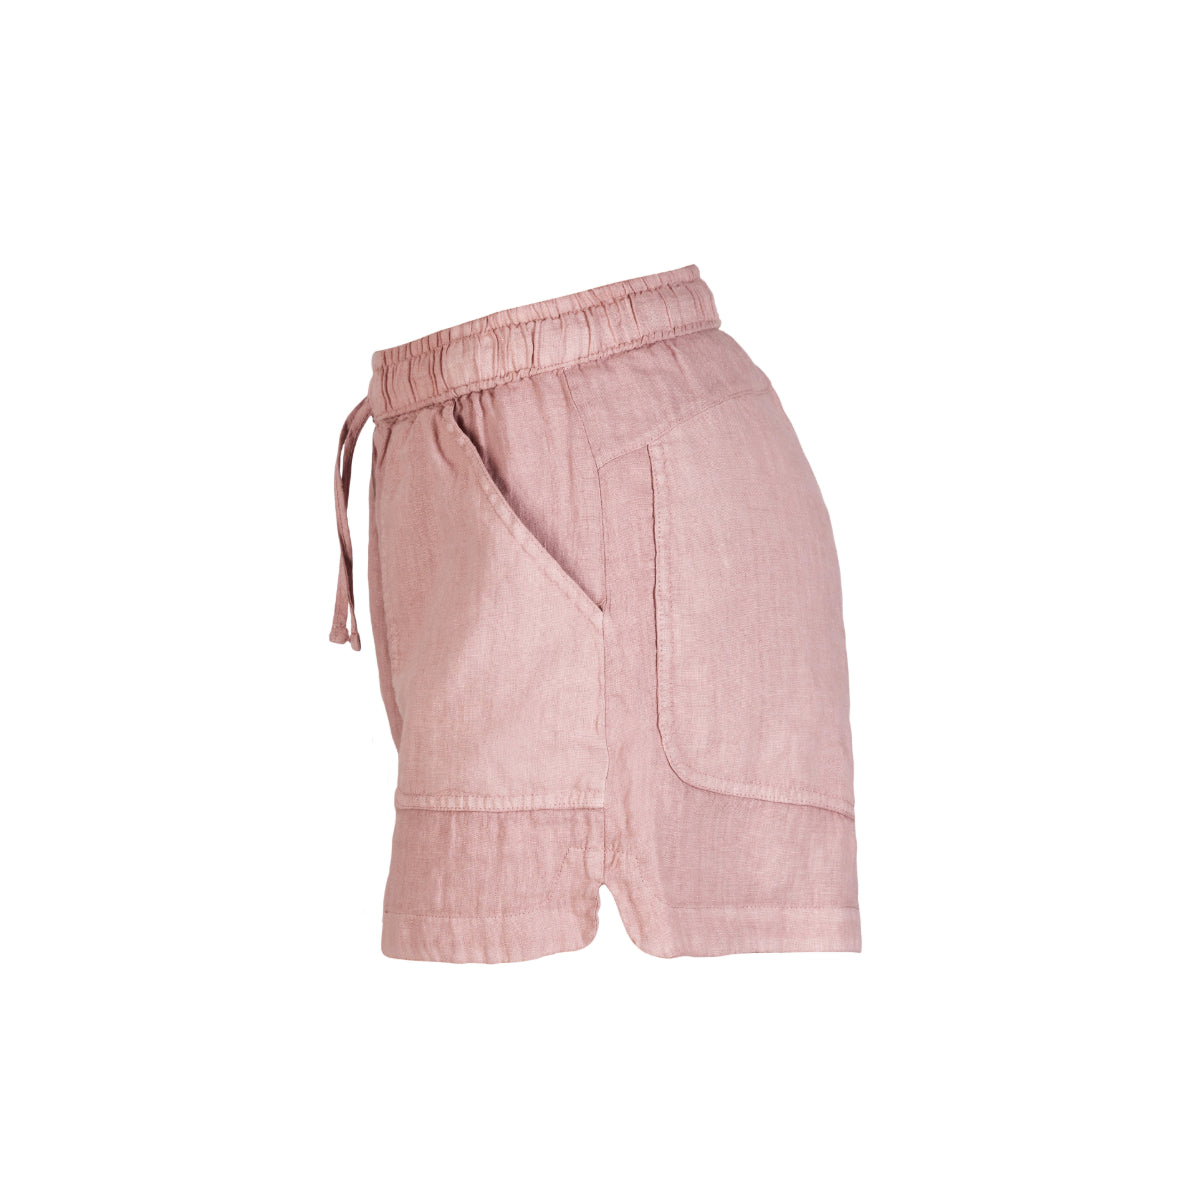 Amundsen Sports - Women's Safari Linen Garment Dyed Shorts - Faded Peony Pink